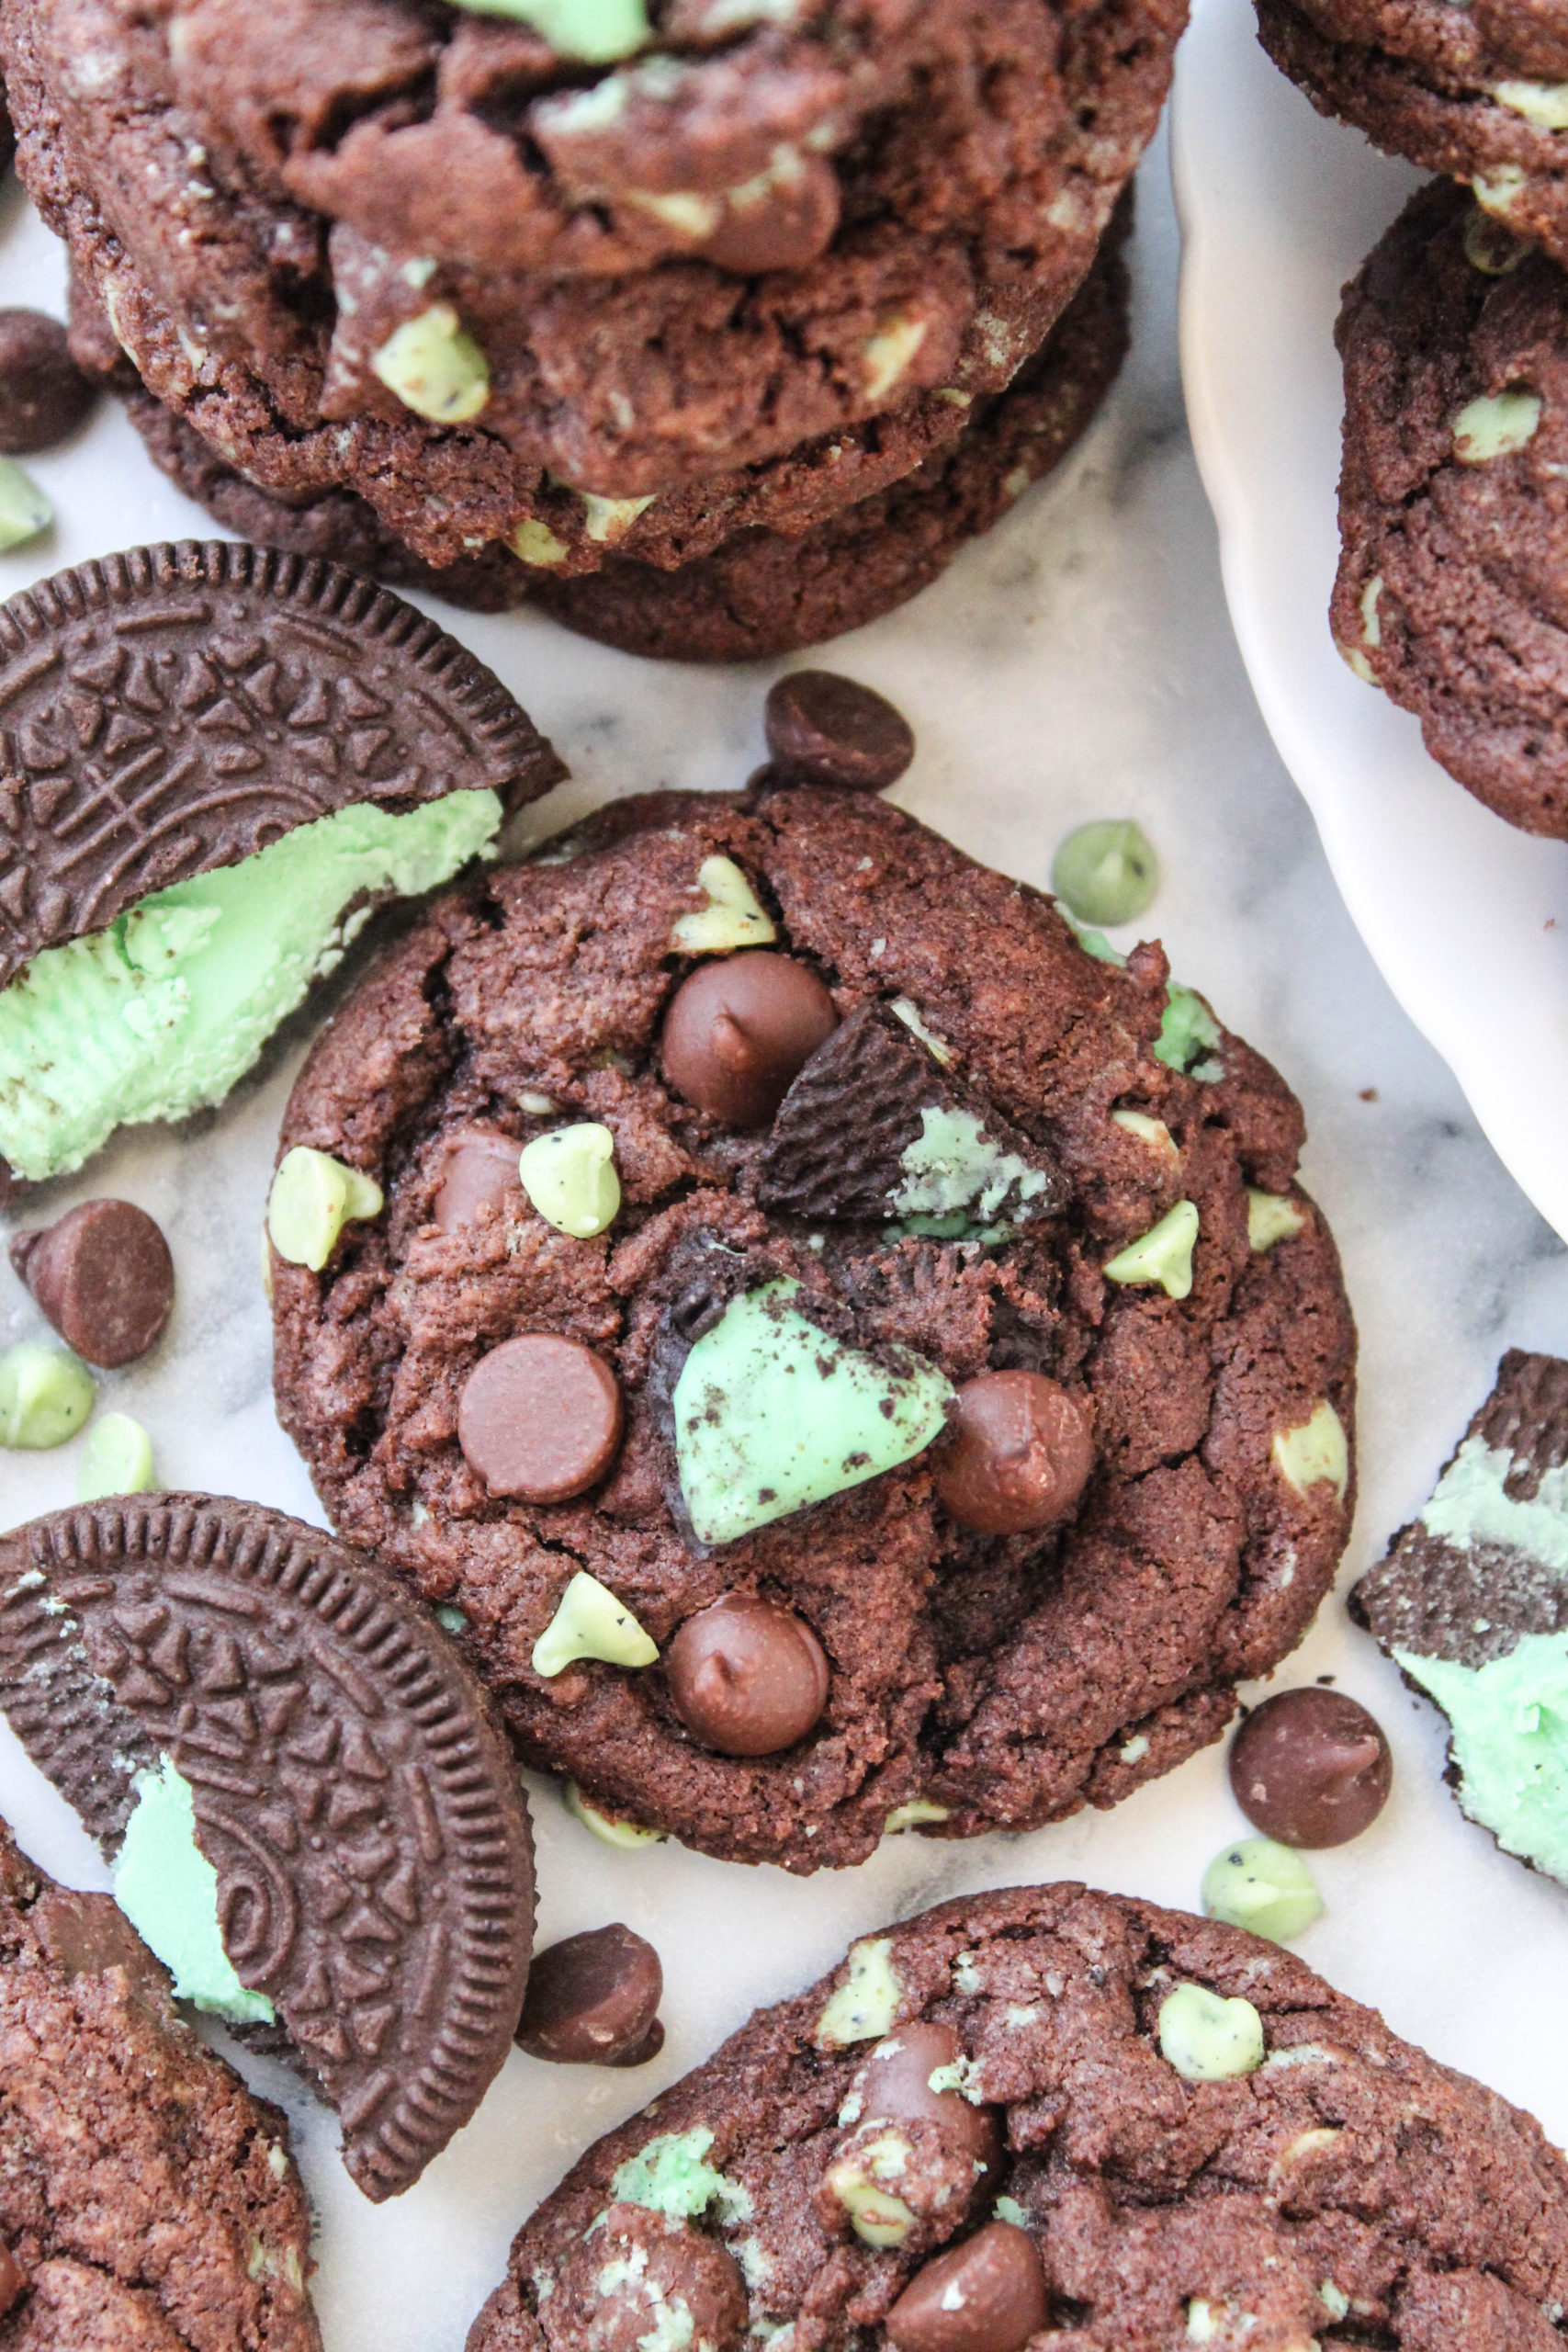 Chocolate Mint Oreo Cookies